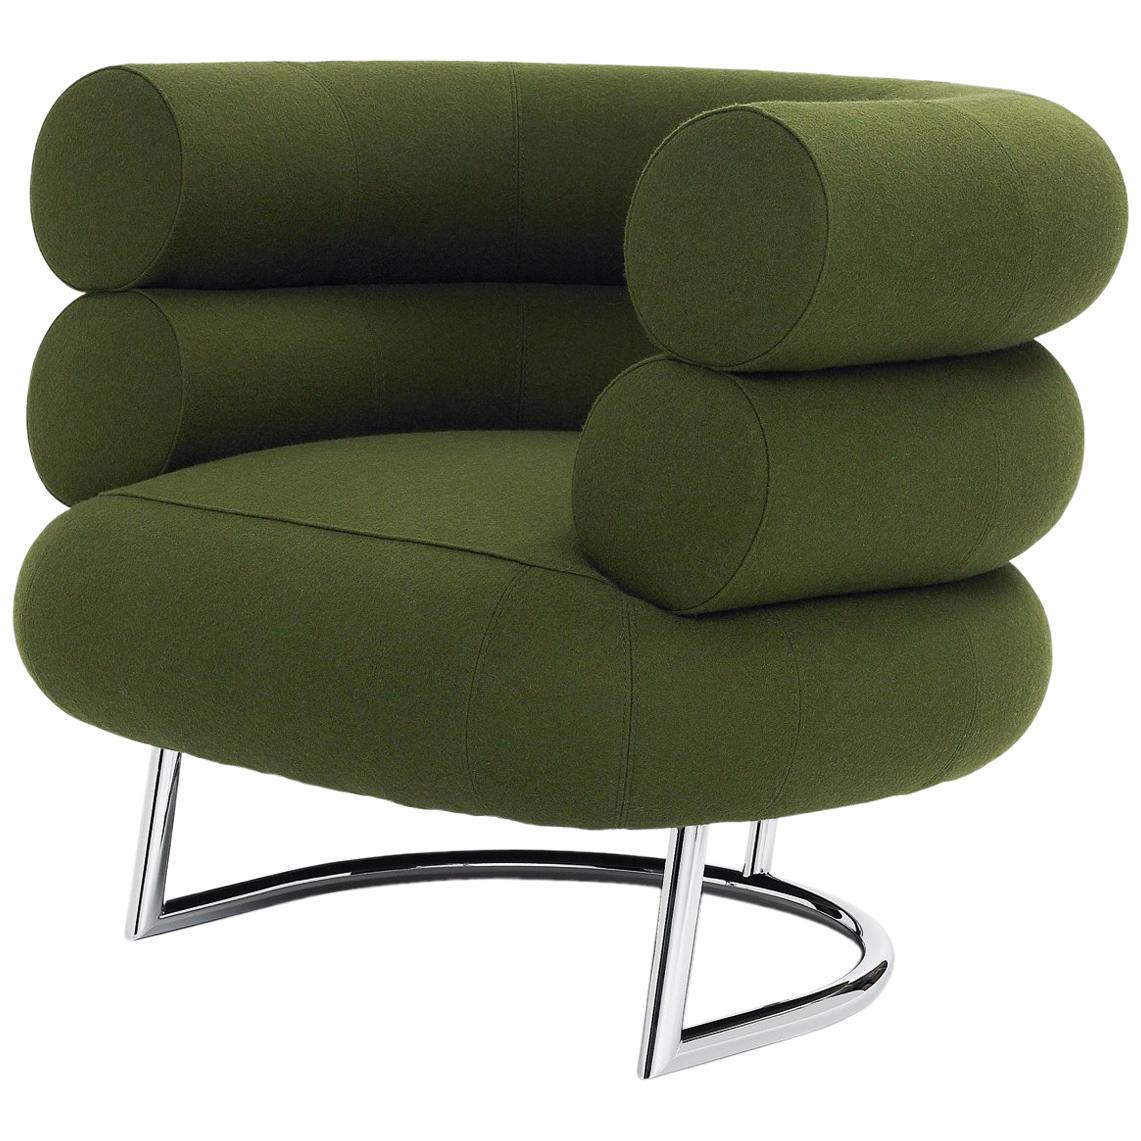 Customizable ClassiCon Bibendum Lounge Chair by Eileen Gray